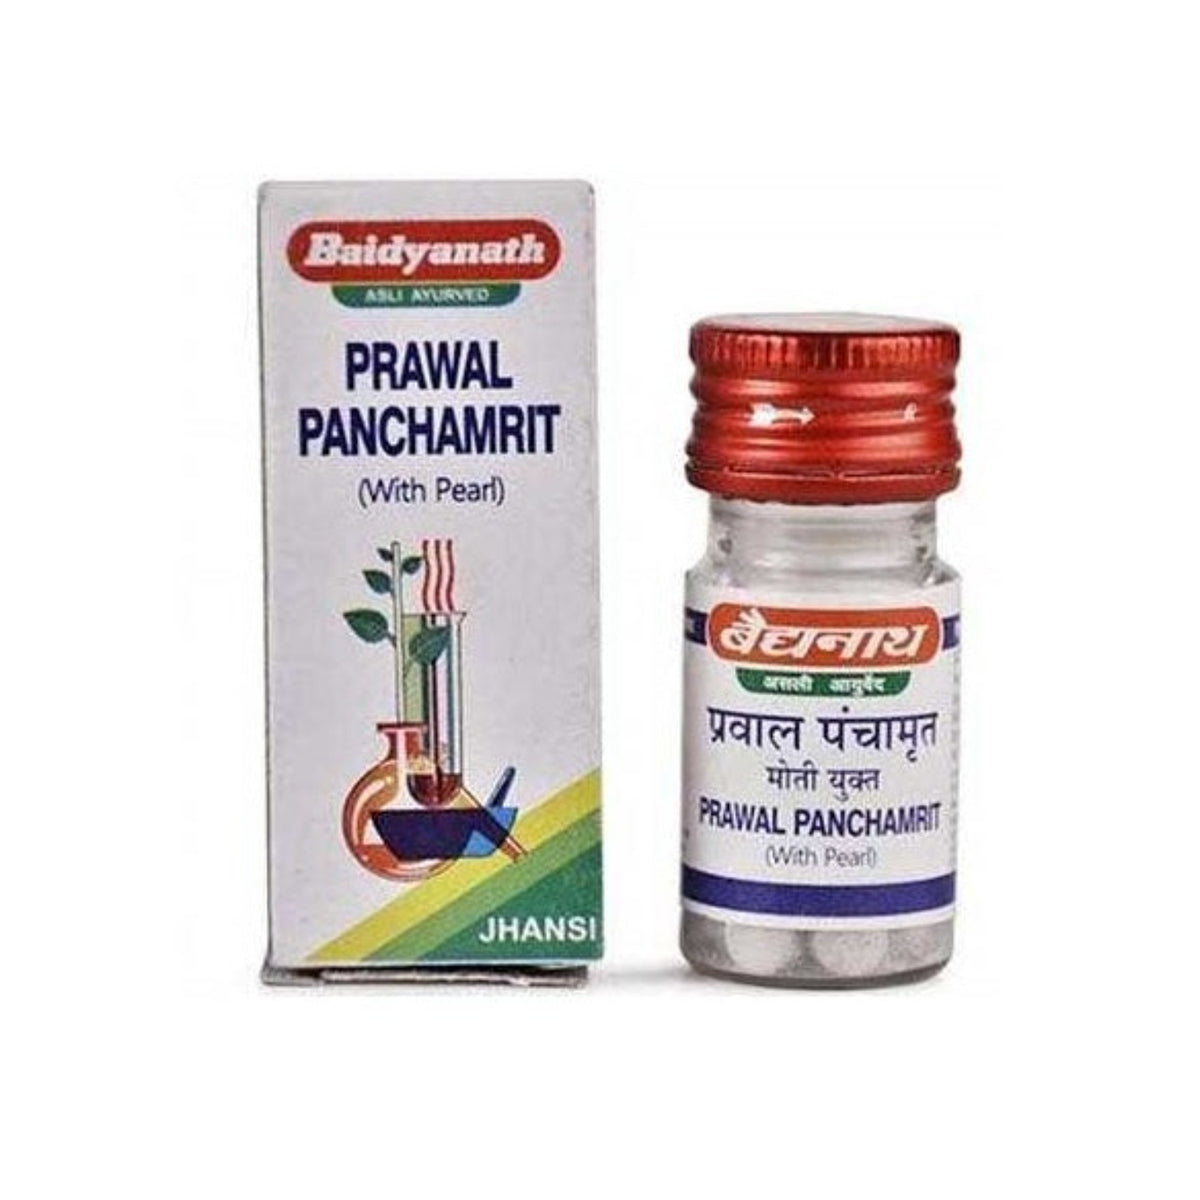 Baidyanath Ayurvedic (Jhansi) Mukta Panchamrit Ras Tablets